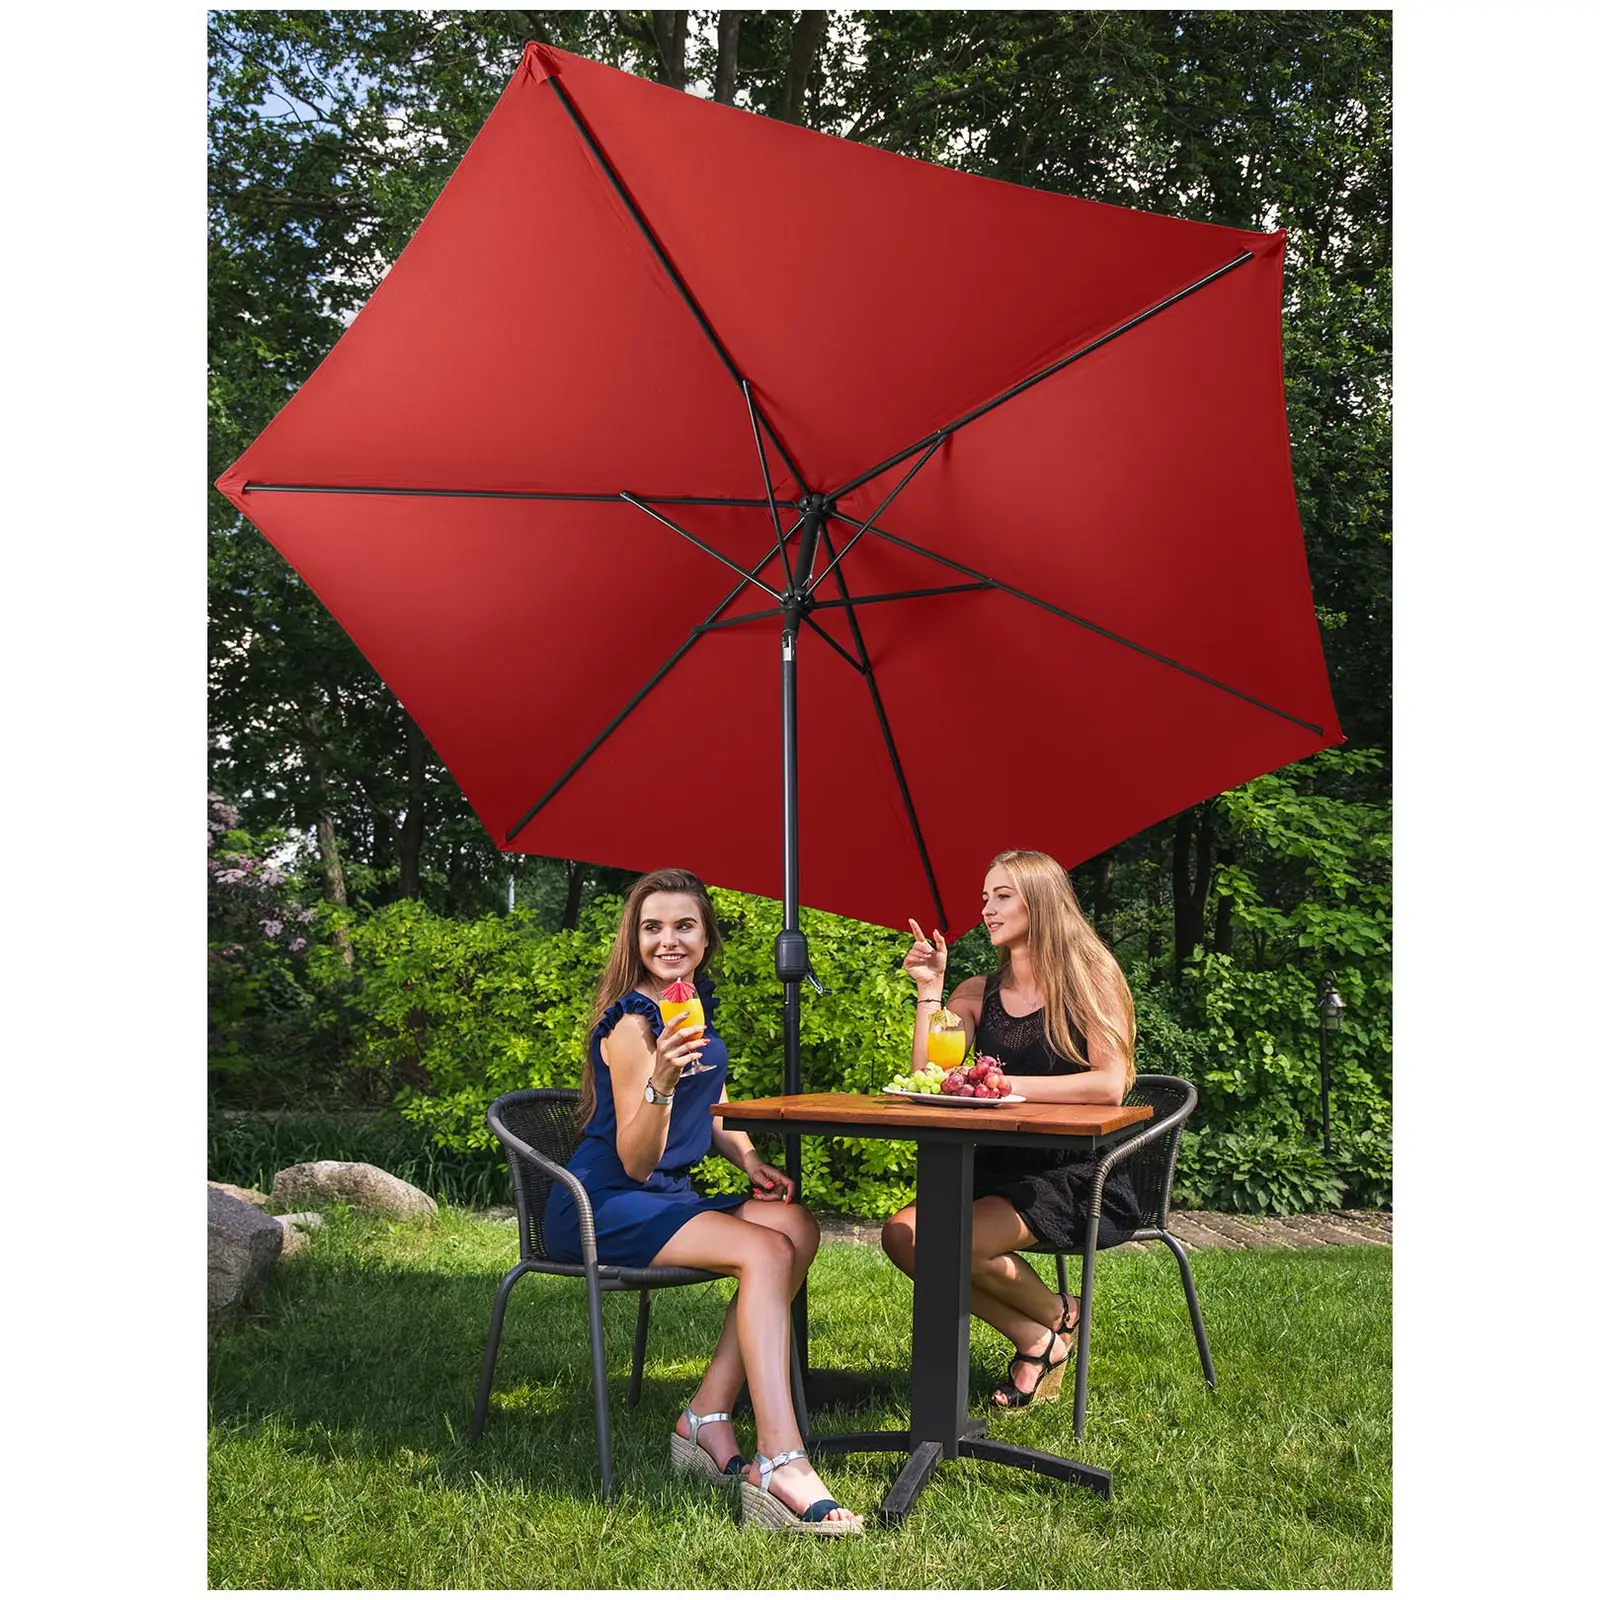 Sombrilla grande - roja - hexagonal - Ø 300 cm - inclinable